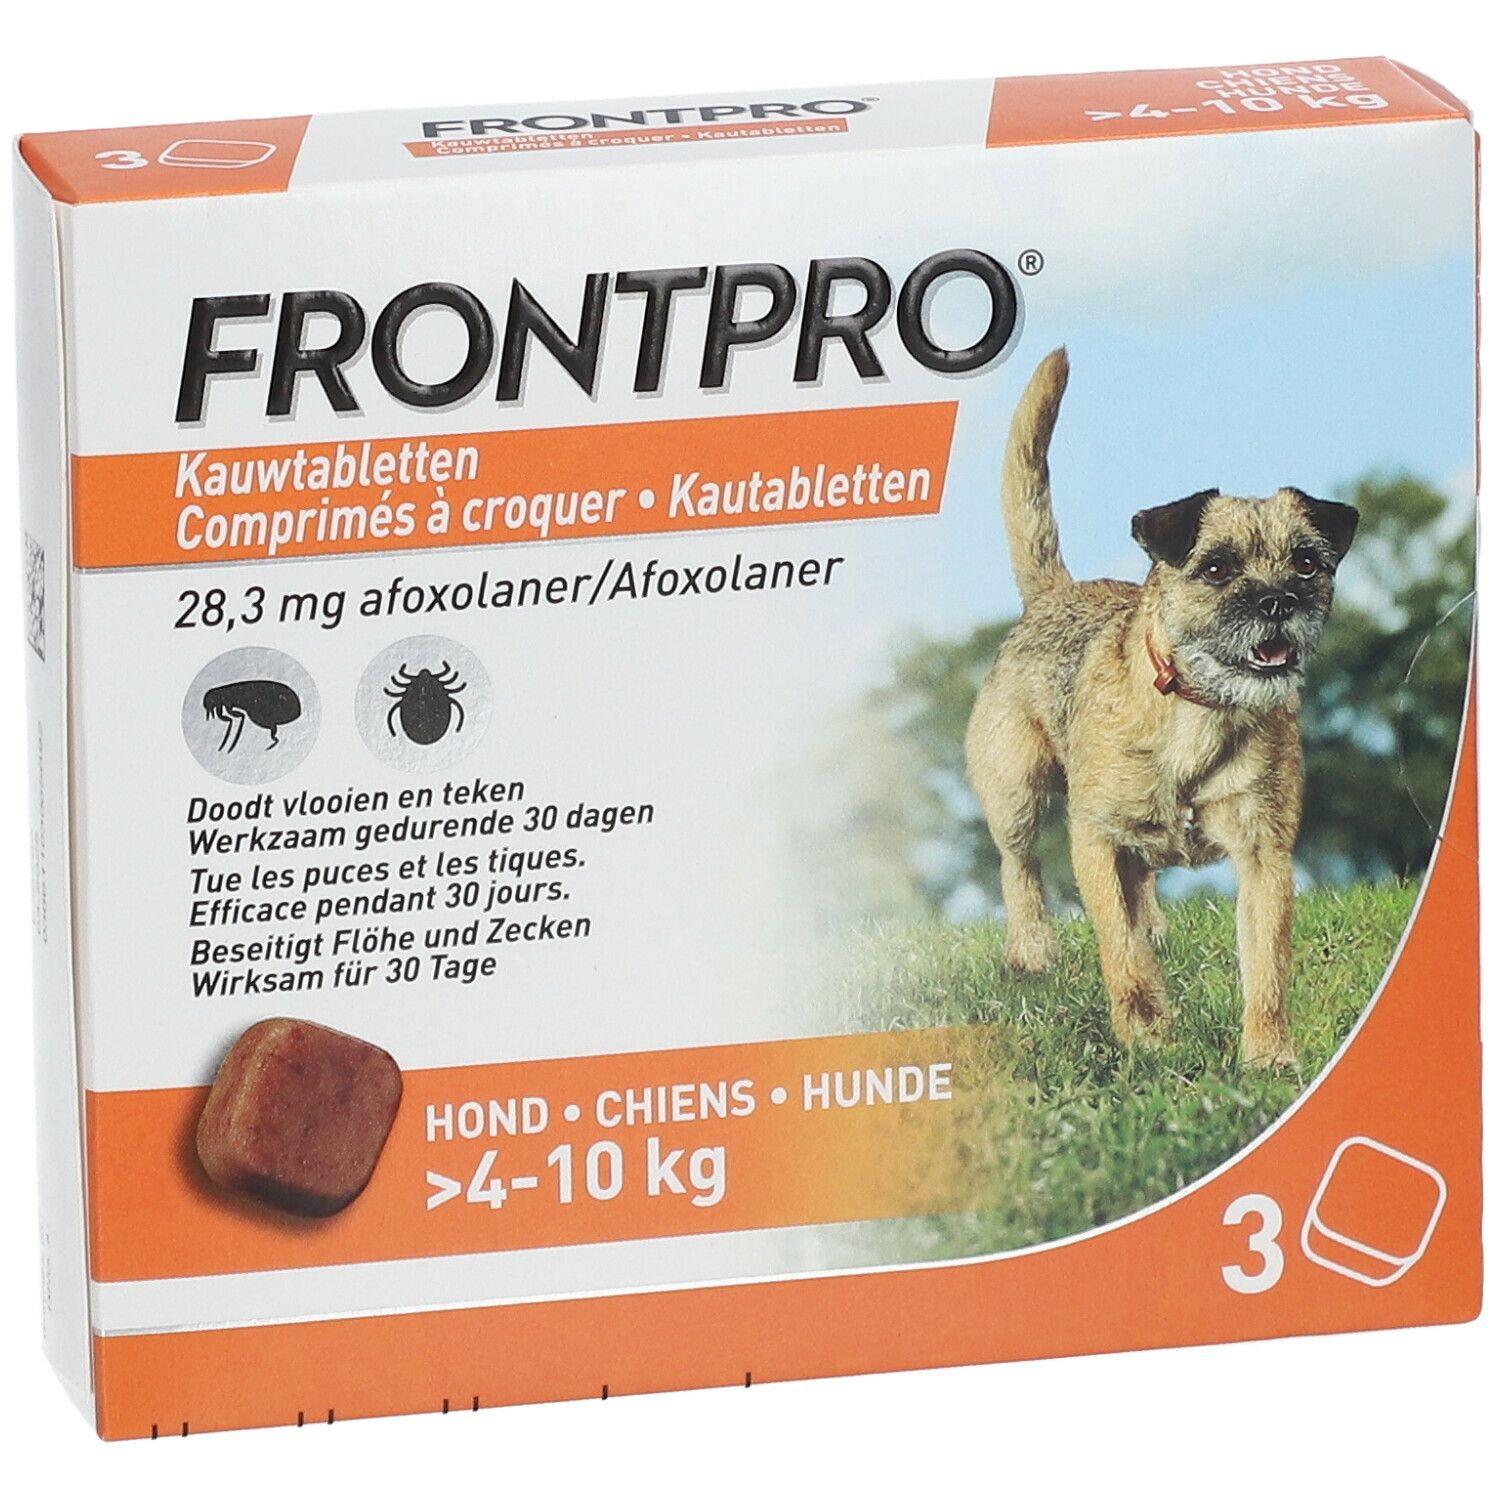 FRONTPRO® Kauwtabletten Hond 4-10 kg